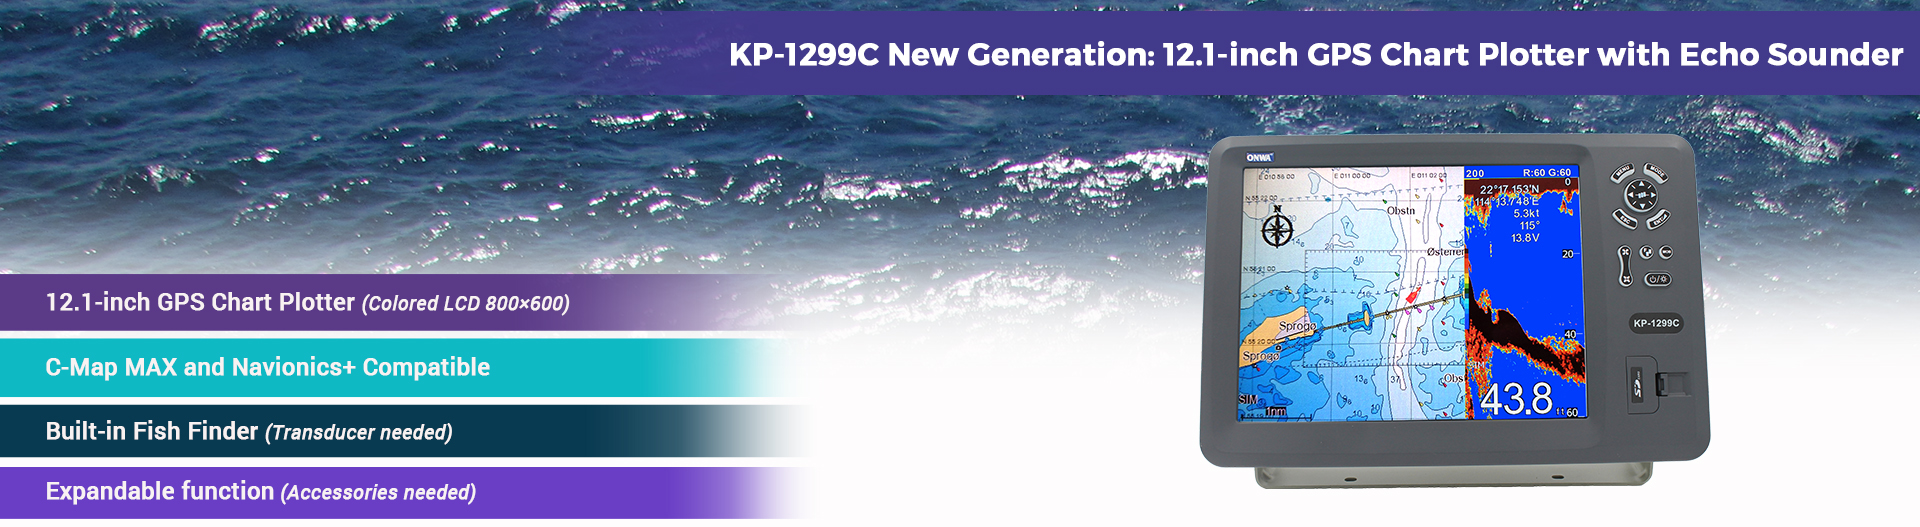 KP-1299C New Generation